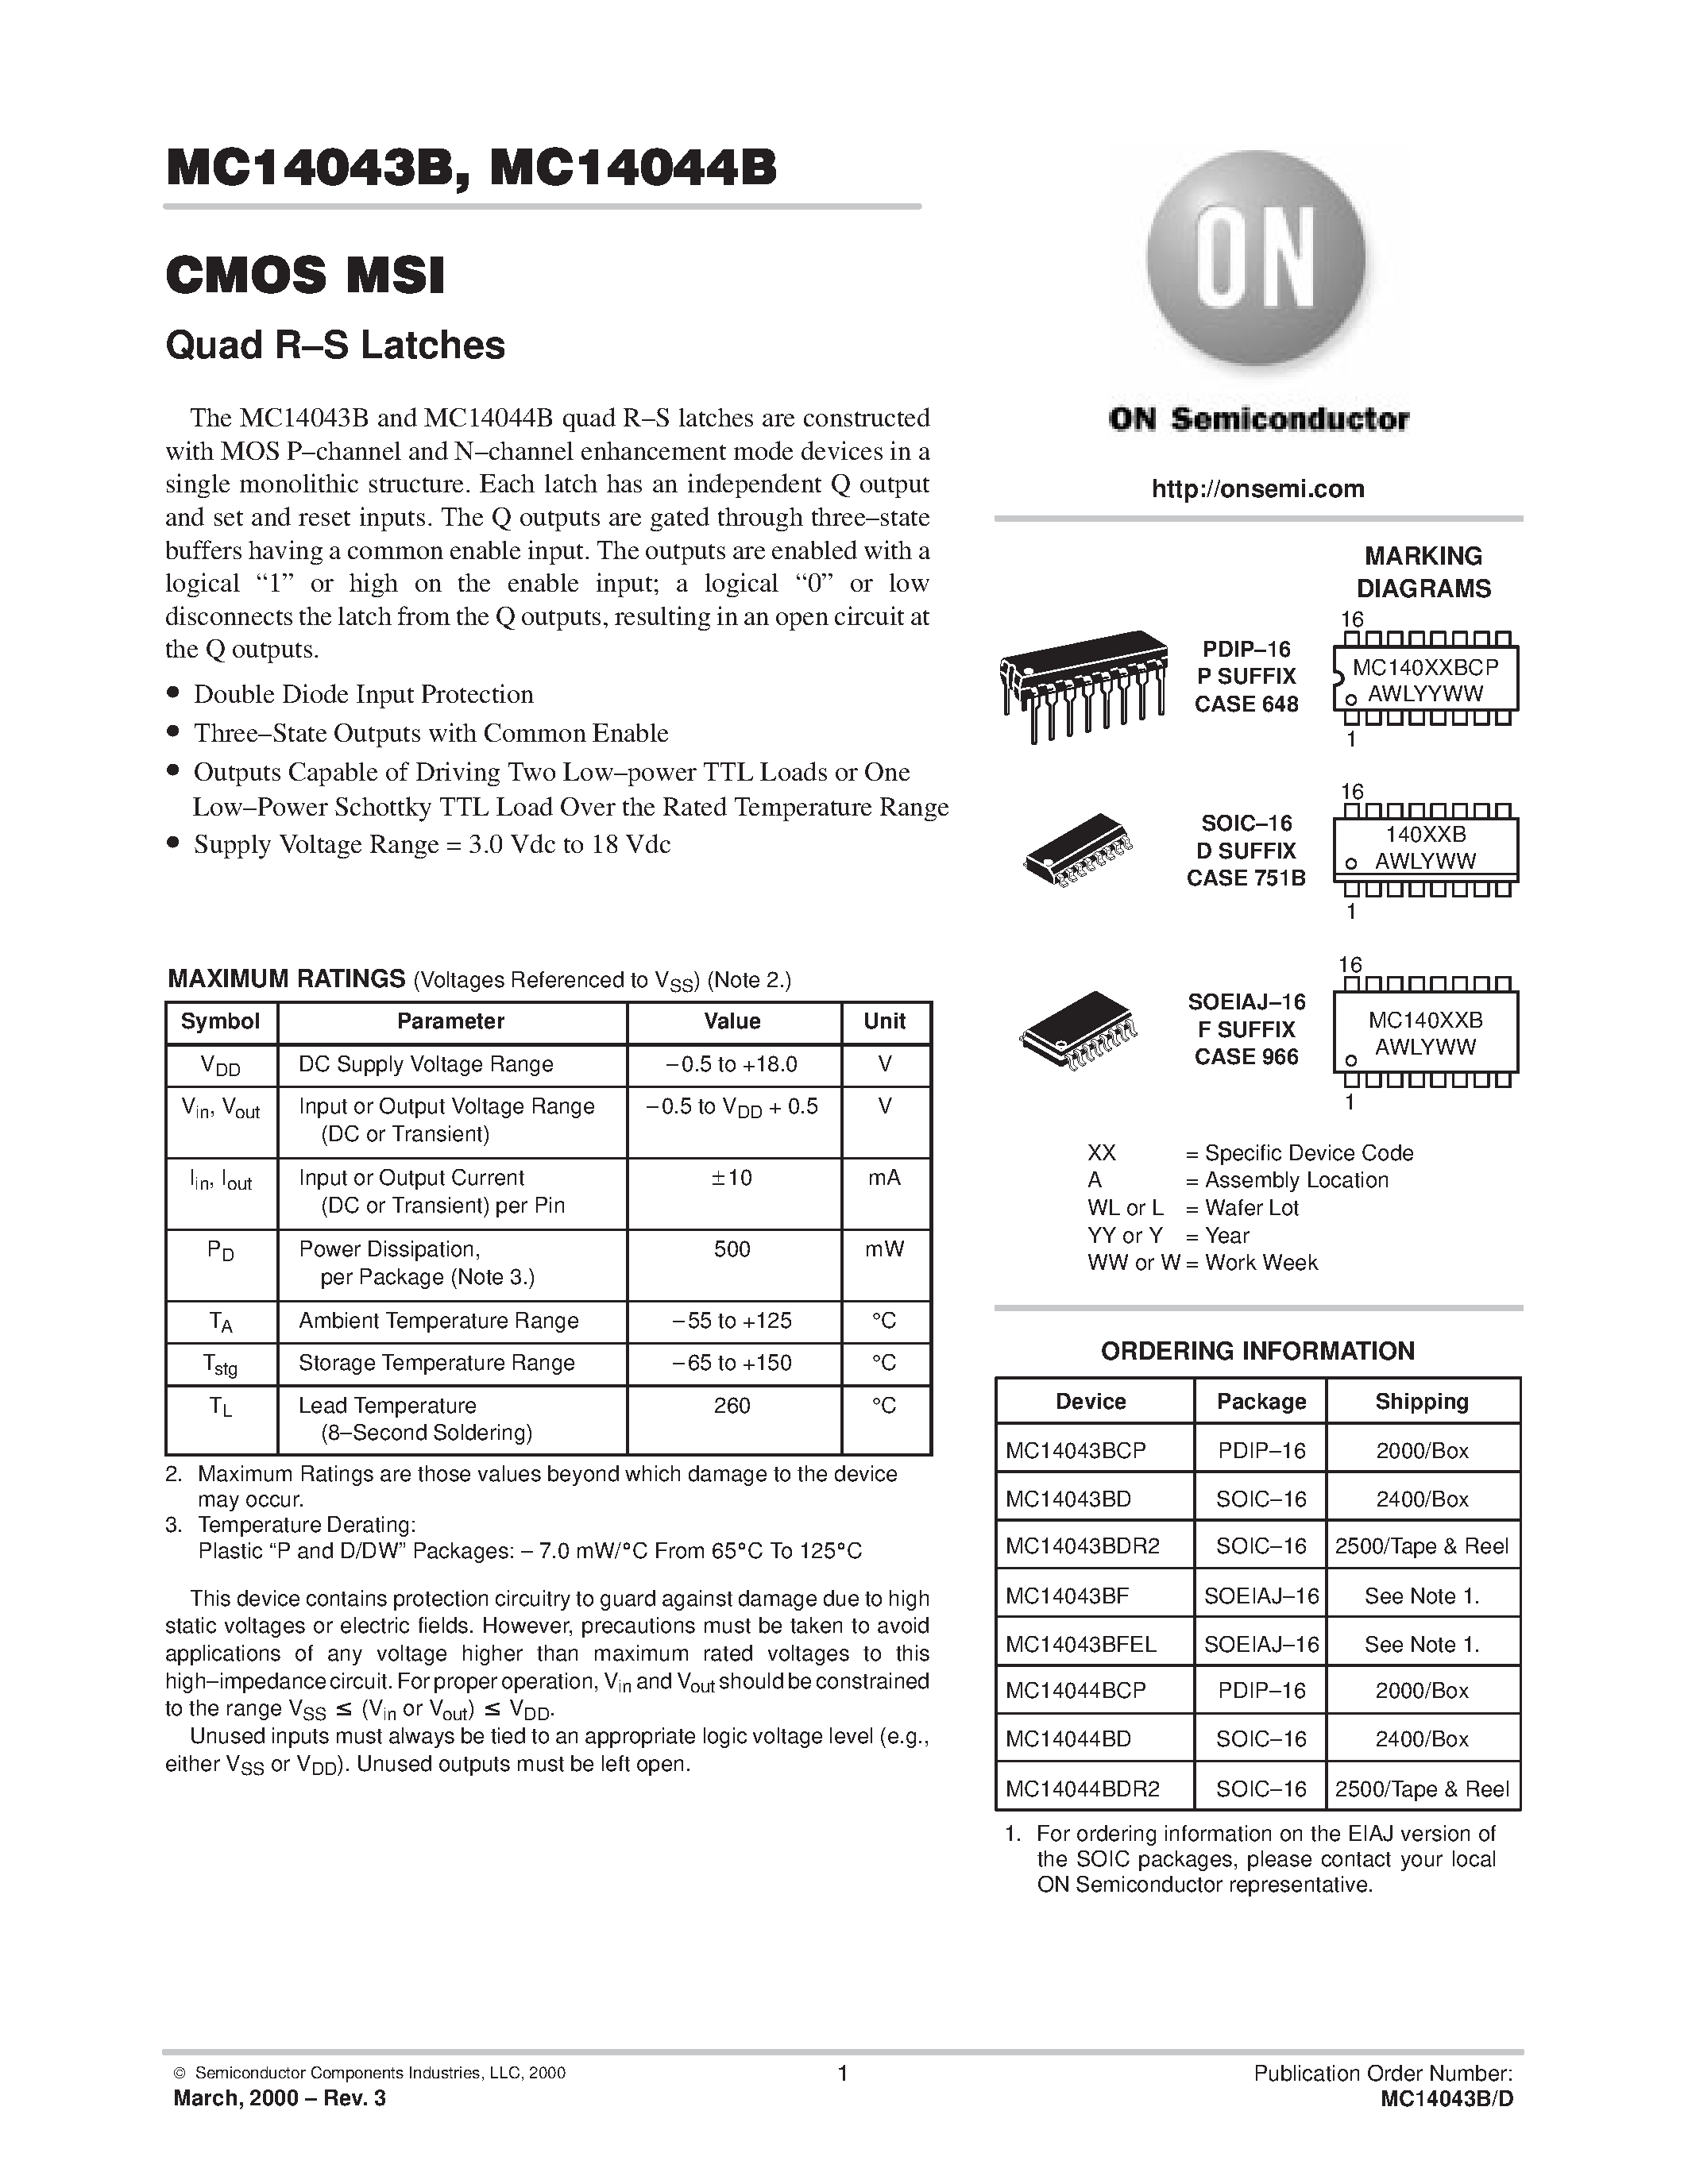 Datasheet MC14043BCP - CMOS MSI(Quad R-S Latches) page 1